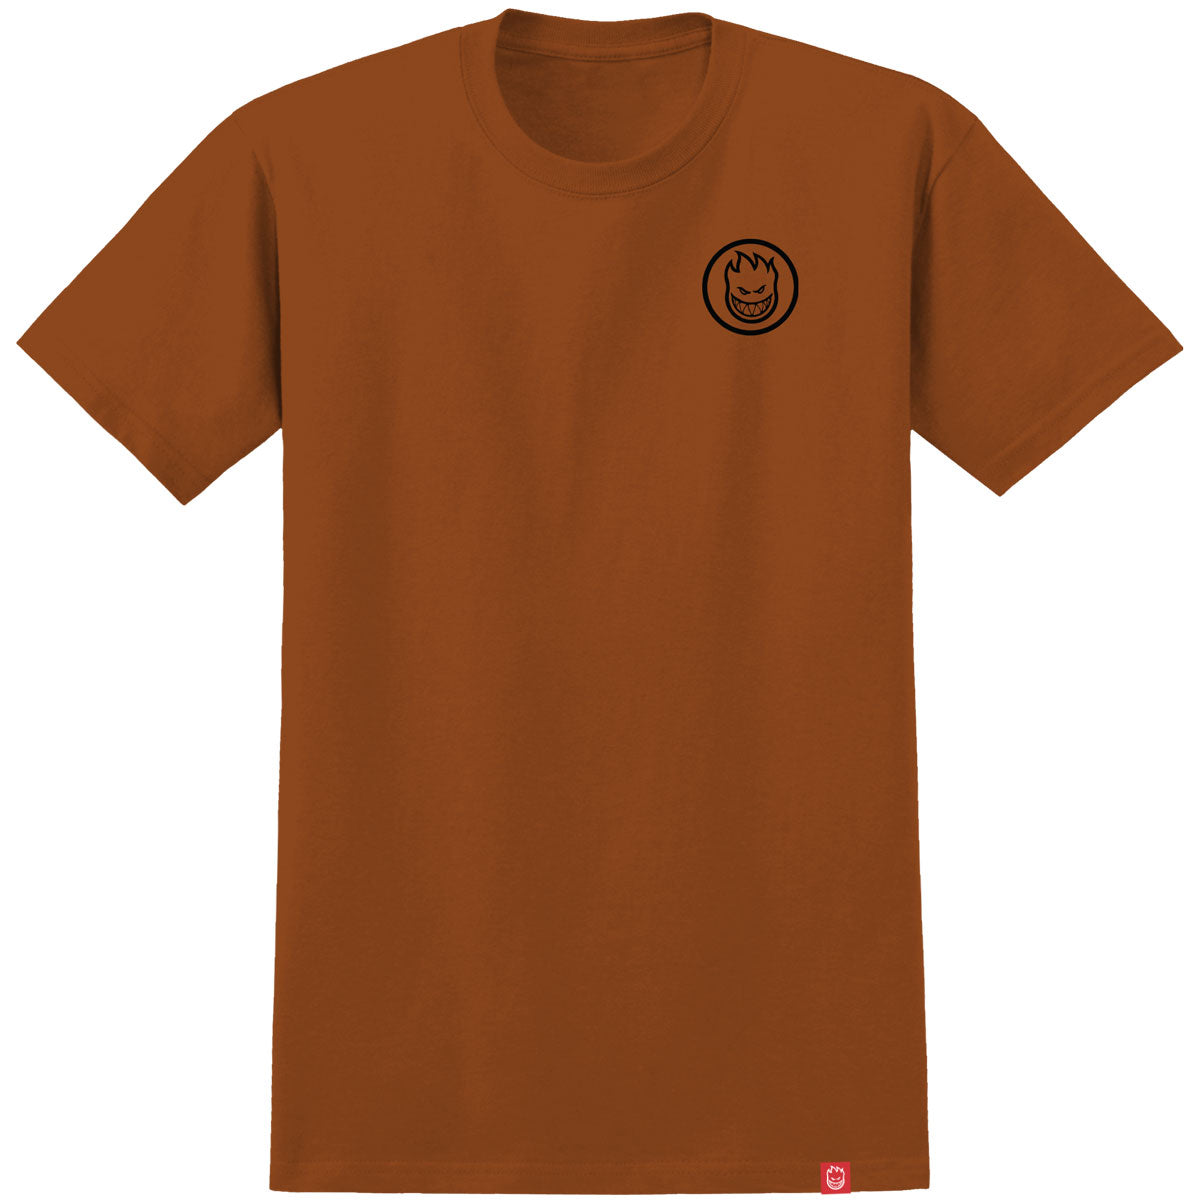 Spitfire Classic Swirl T-Shirt - Orange/Black/Orange image 2